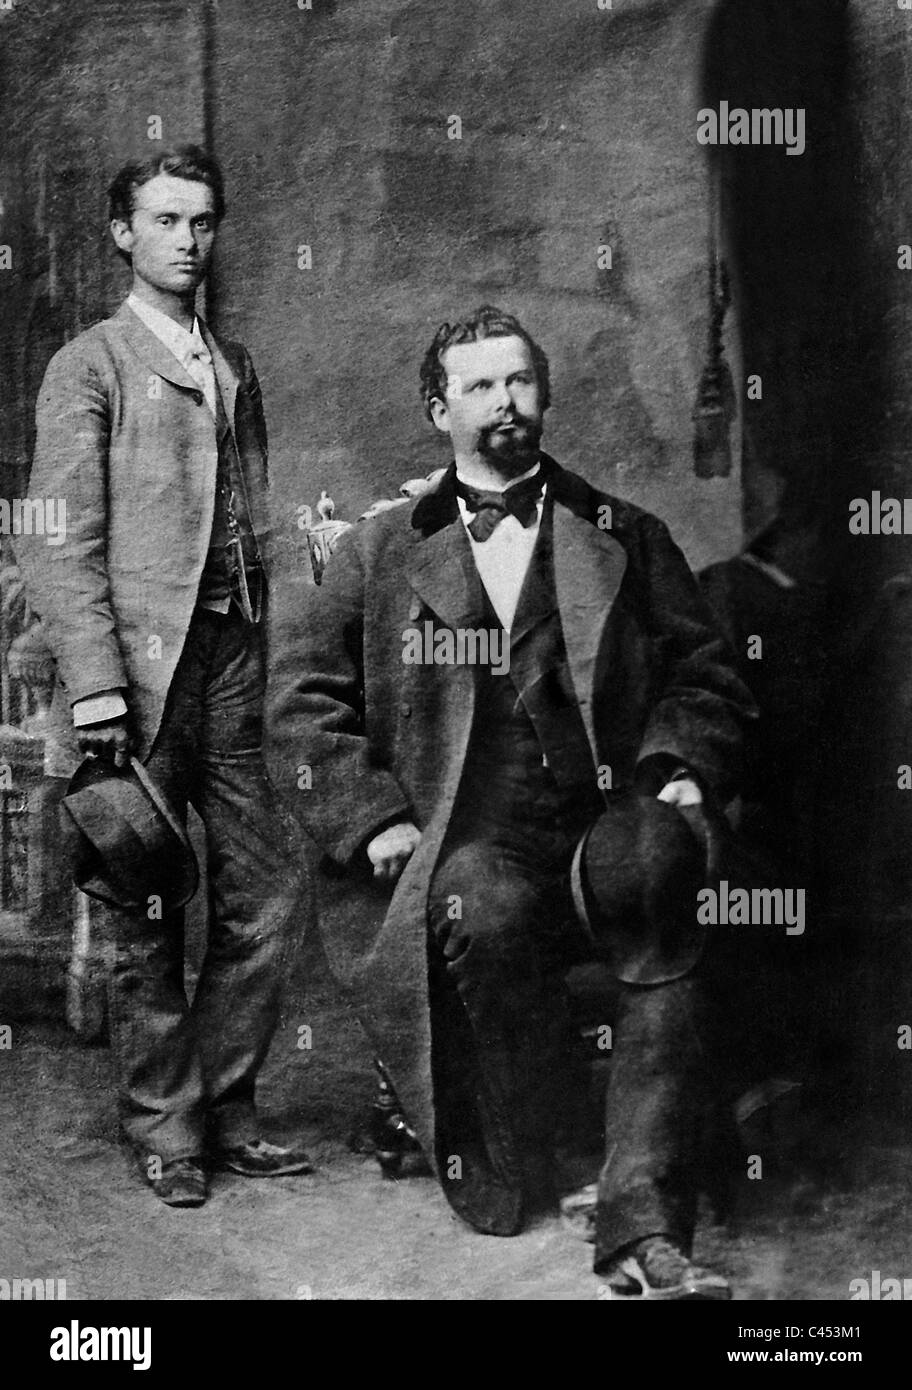 Josef Kainz und König Ludwig II. von Bayern, 1881 Stockfotografie - Alamy